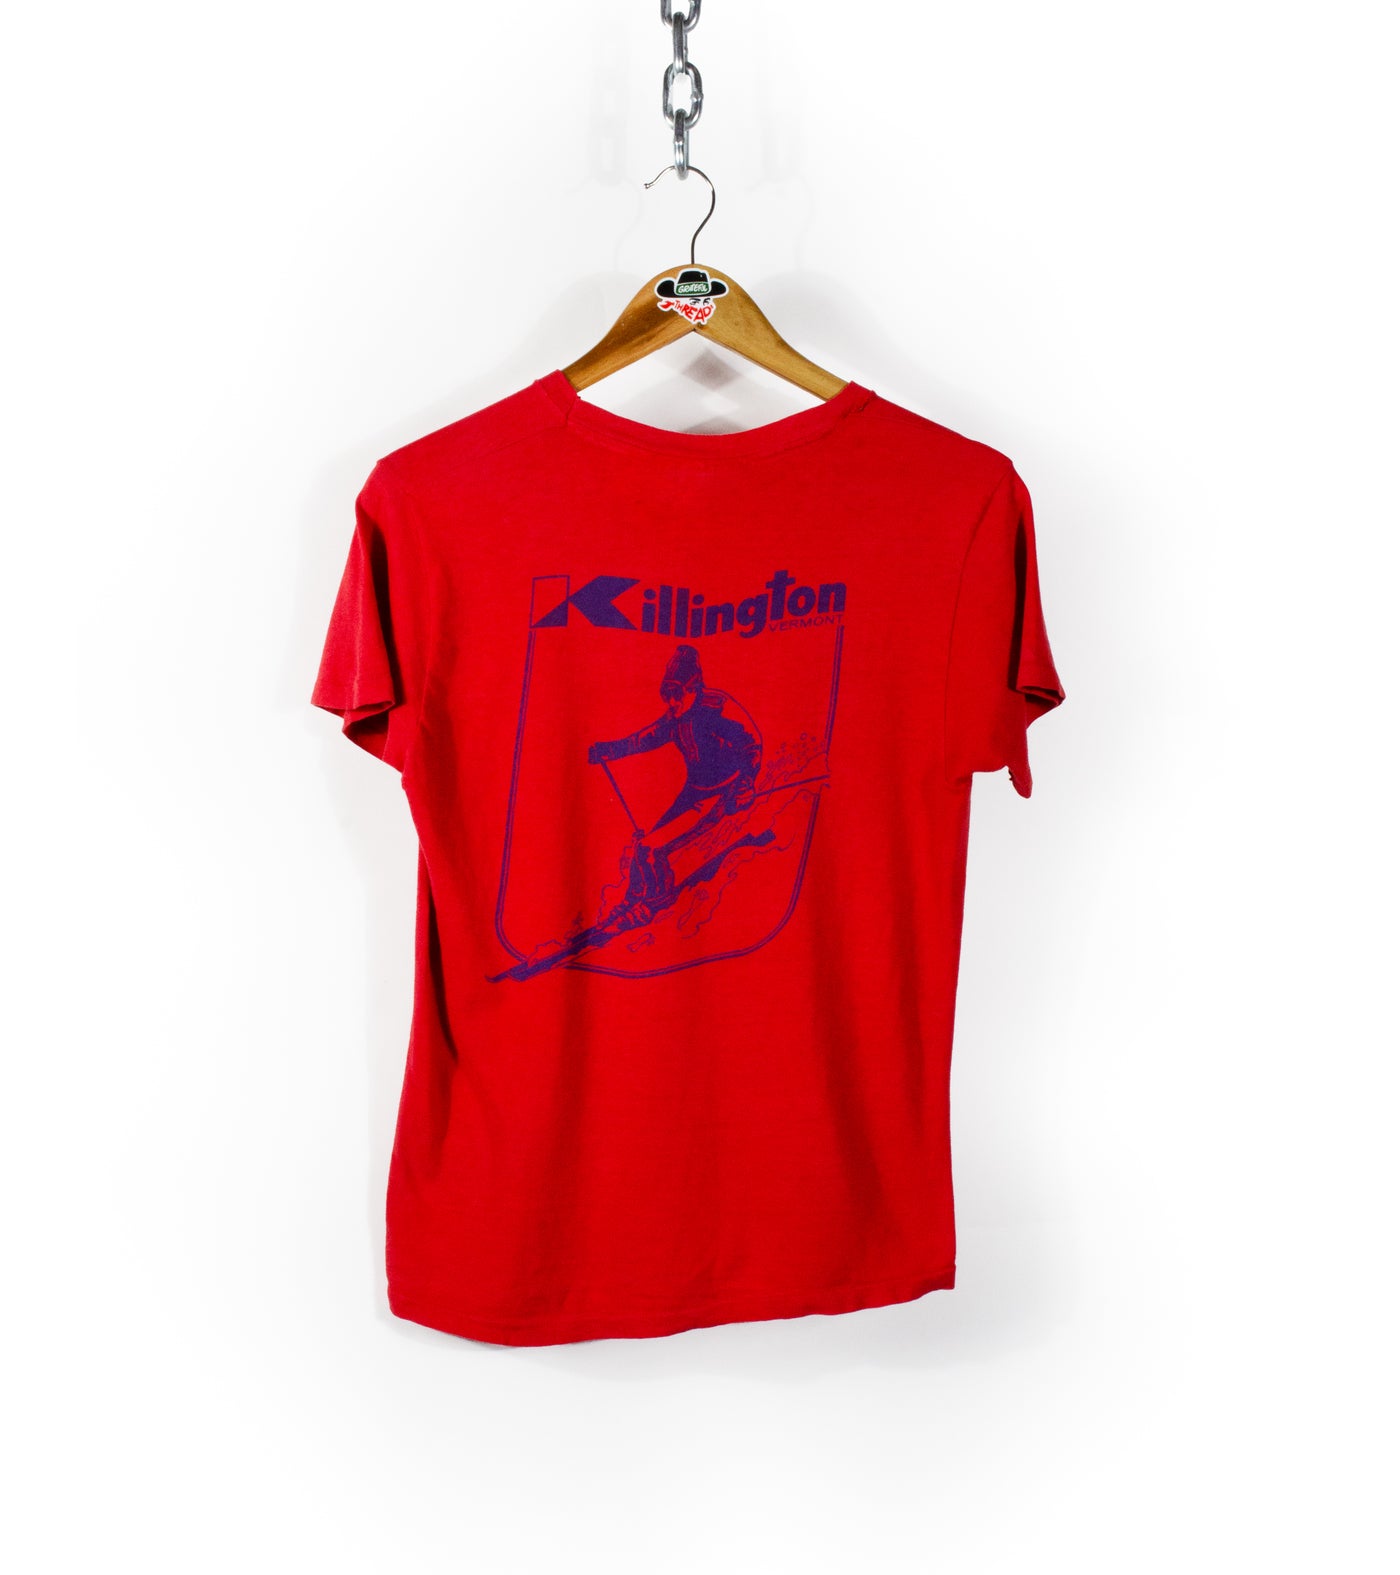 Vintage 1982 Killington MS Marathon T-Shirt